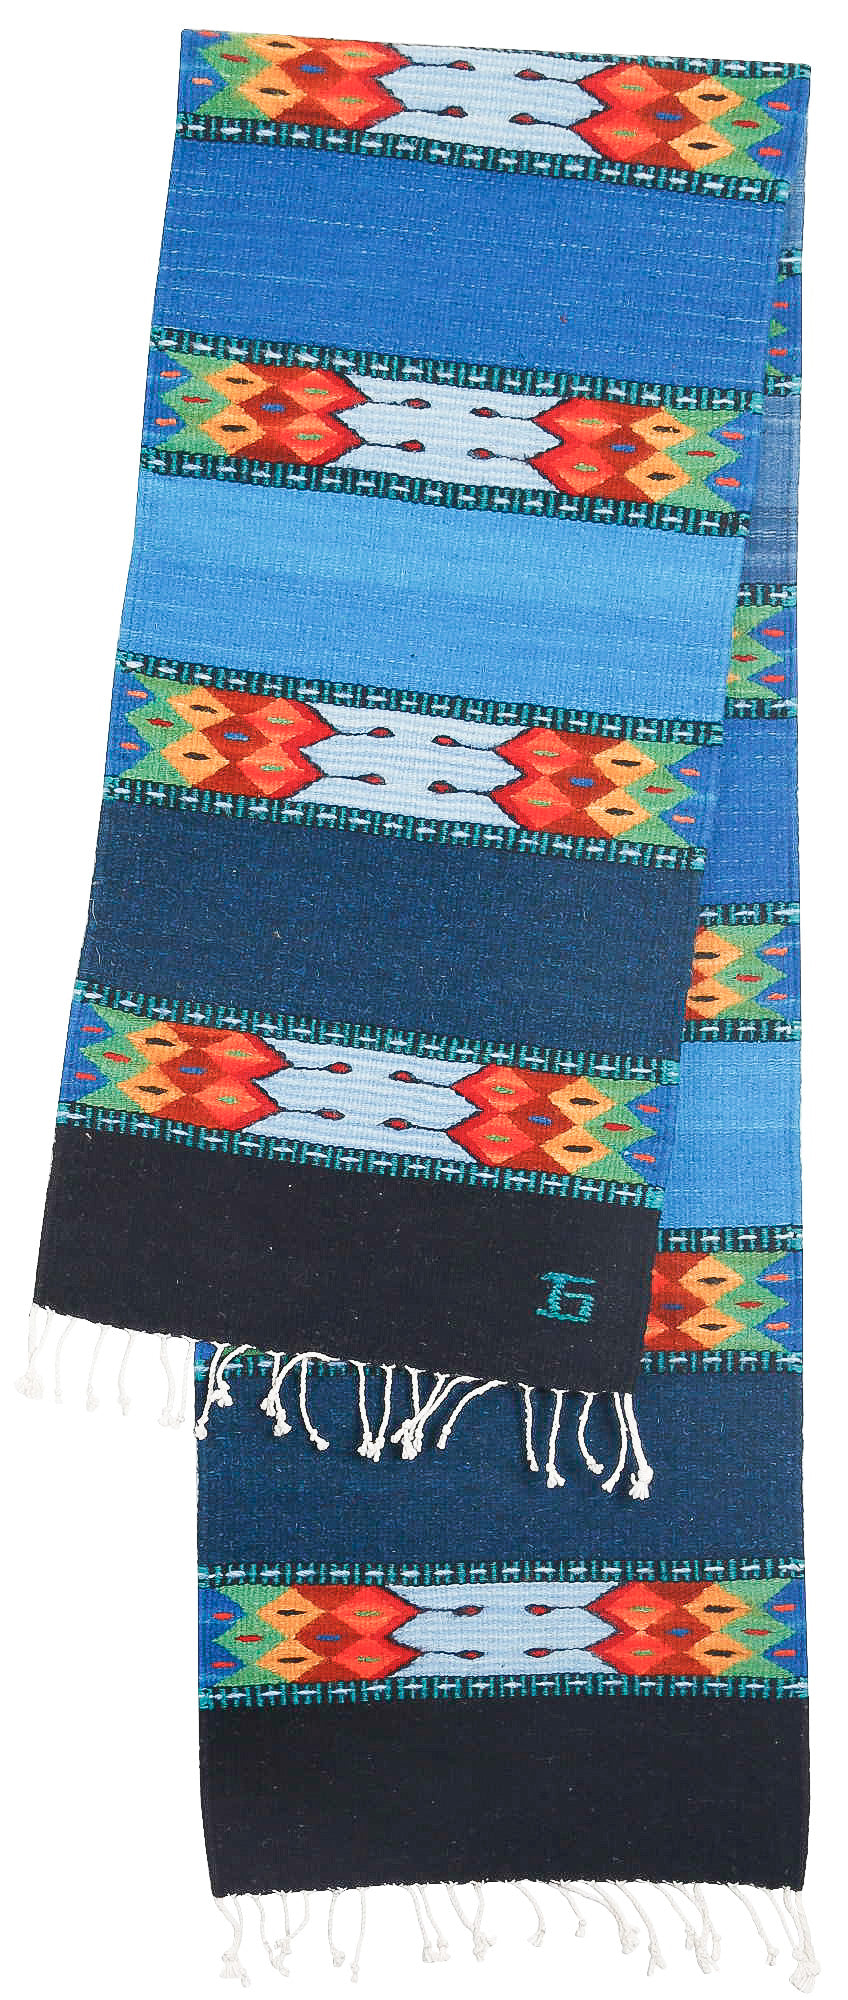 Handwoven Zapotec Indian Table Runner - La Playa Wool Oaxacan Textile